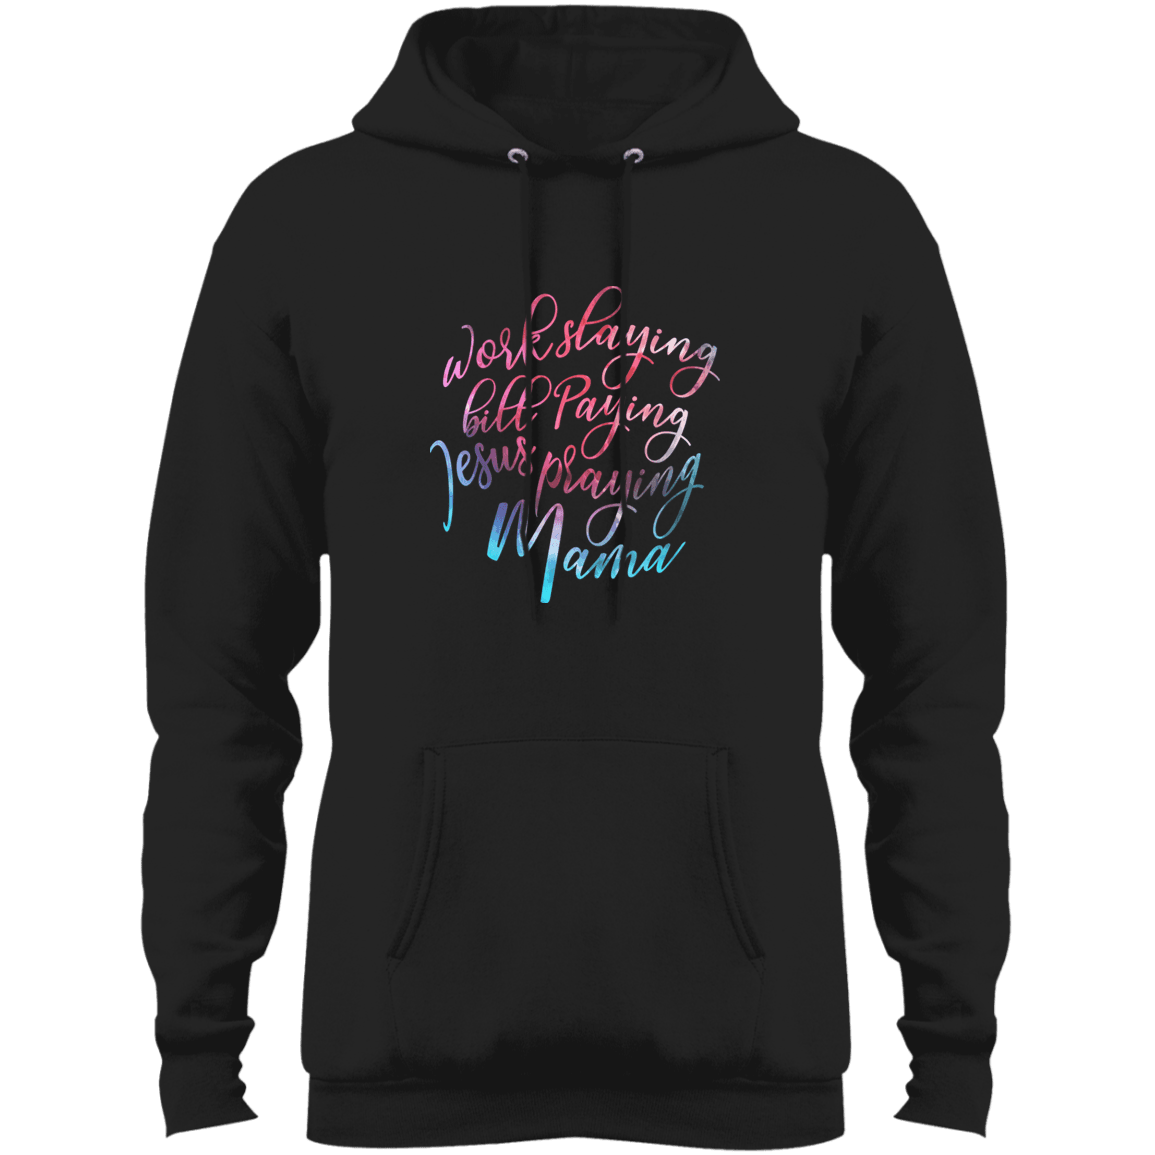 Designs by MyUtopia Shout Out:Jesus Praying Mama Core Fleece Pullover Hoodie,Jet Black / S,Sweatshirts